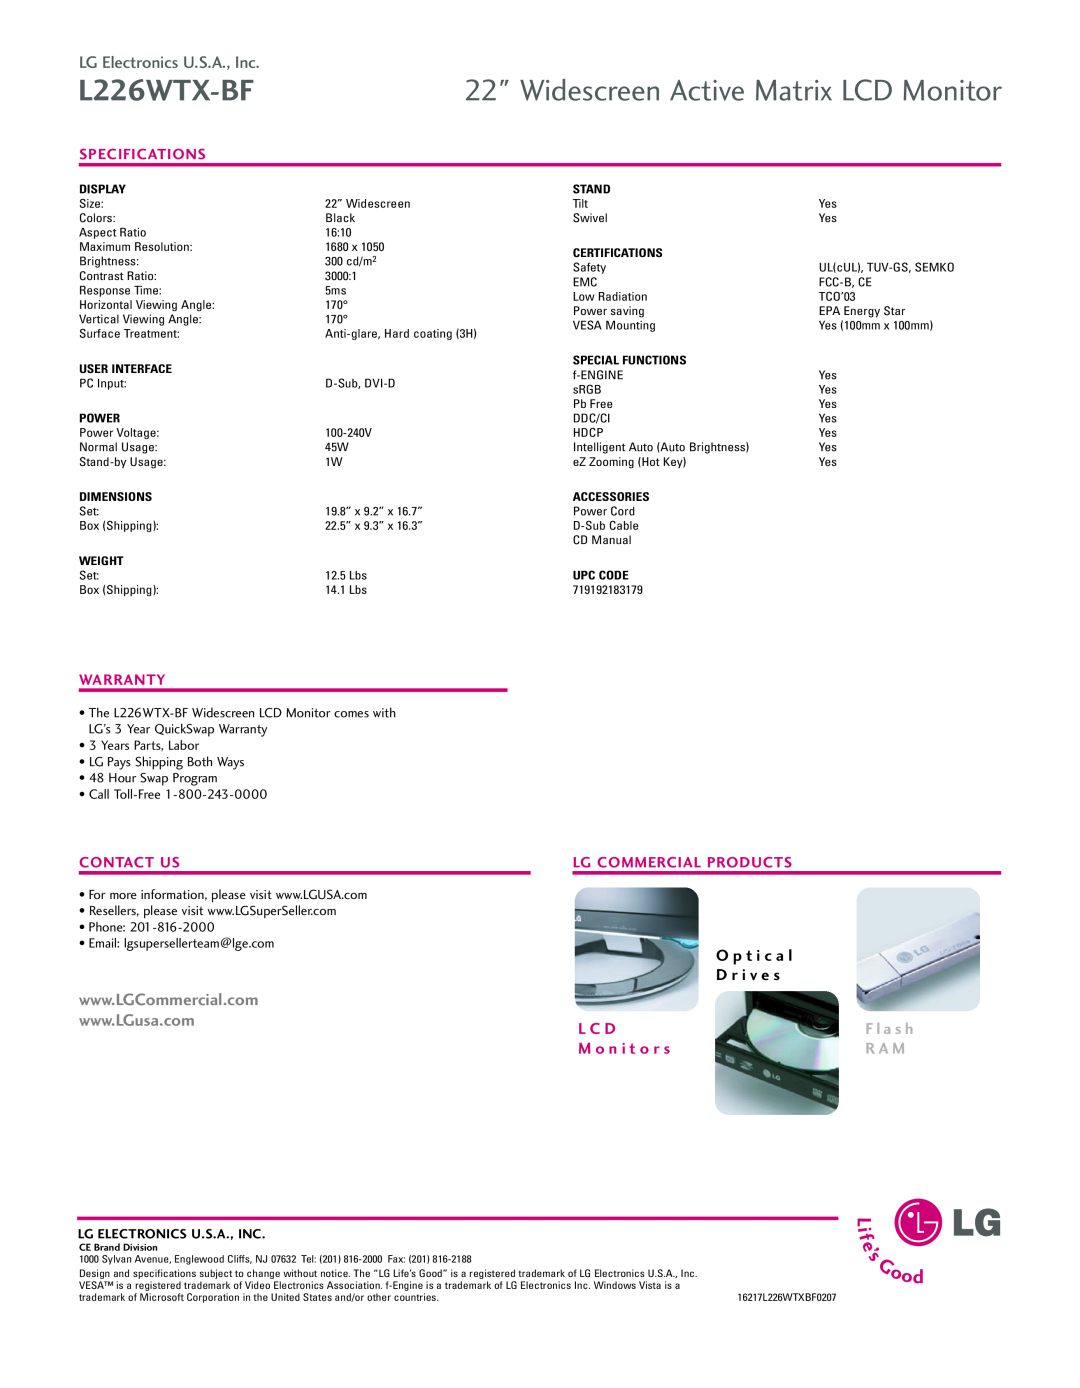 LG Electronics L226WTX-BF Widescreen Active Matrix LCD Monitor, LG Electronics U.S.A., Inc, O p t i c a l D r i v e s 